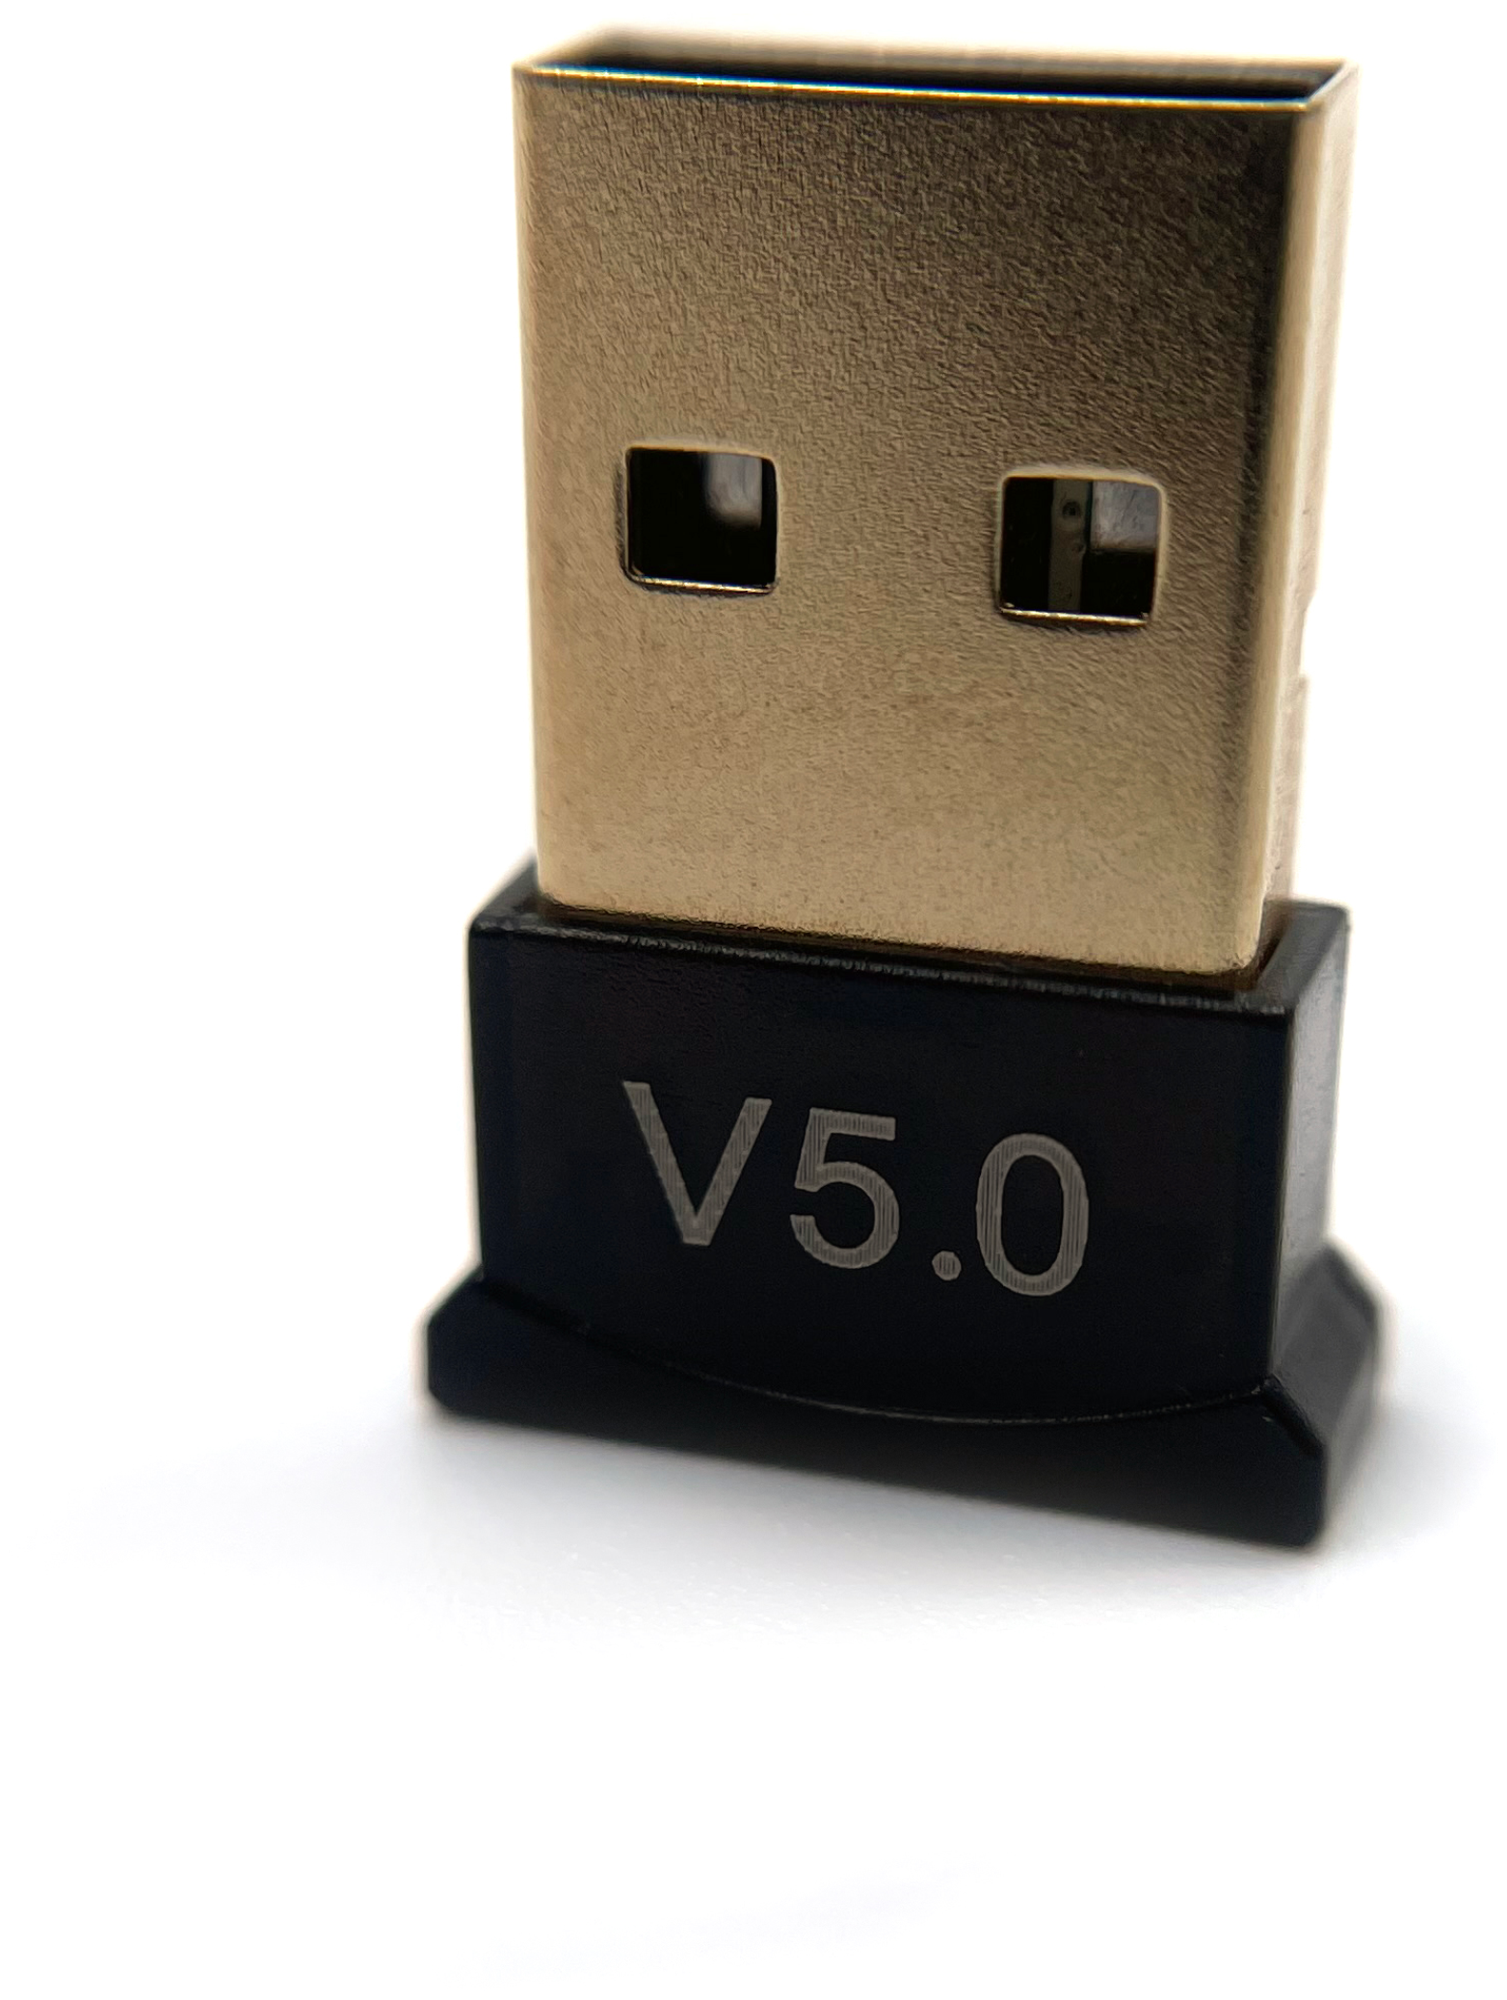 Адаптер Bluetooth 5.0 / блютуз для пк / беспроводной USB Bluetooth 5.0 для ноутбука / для беспроводных наушников